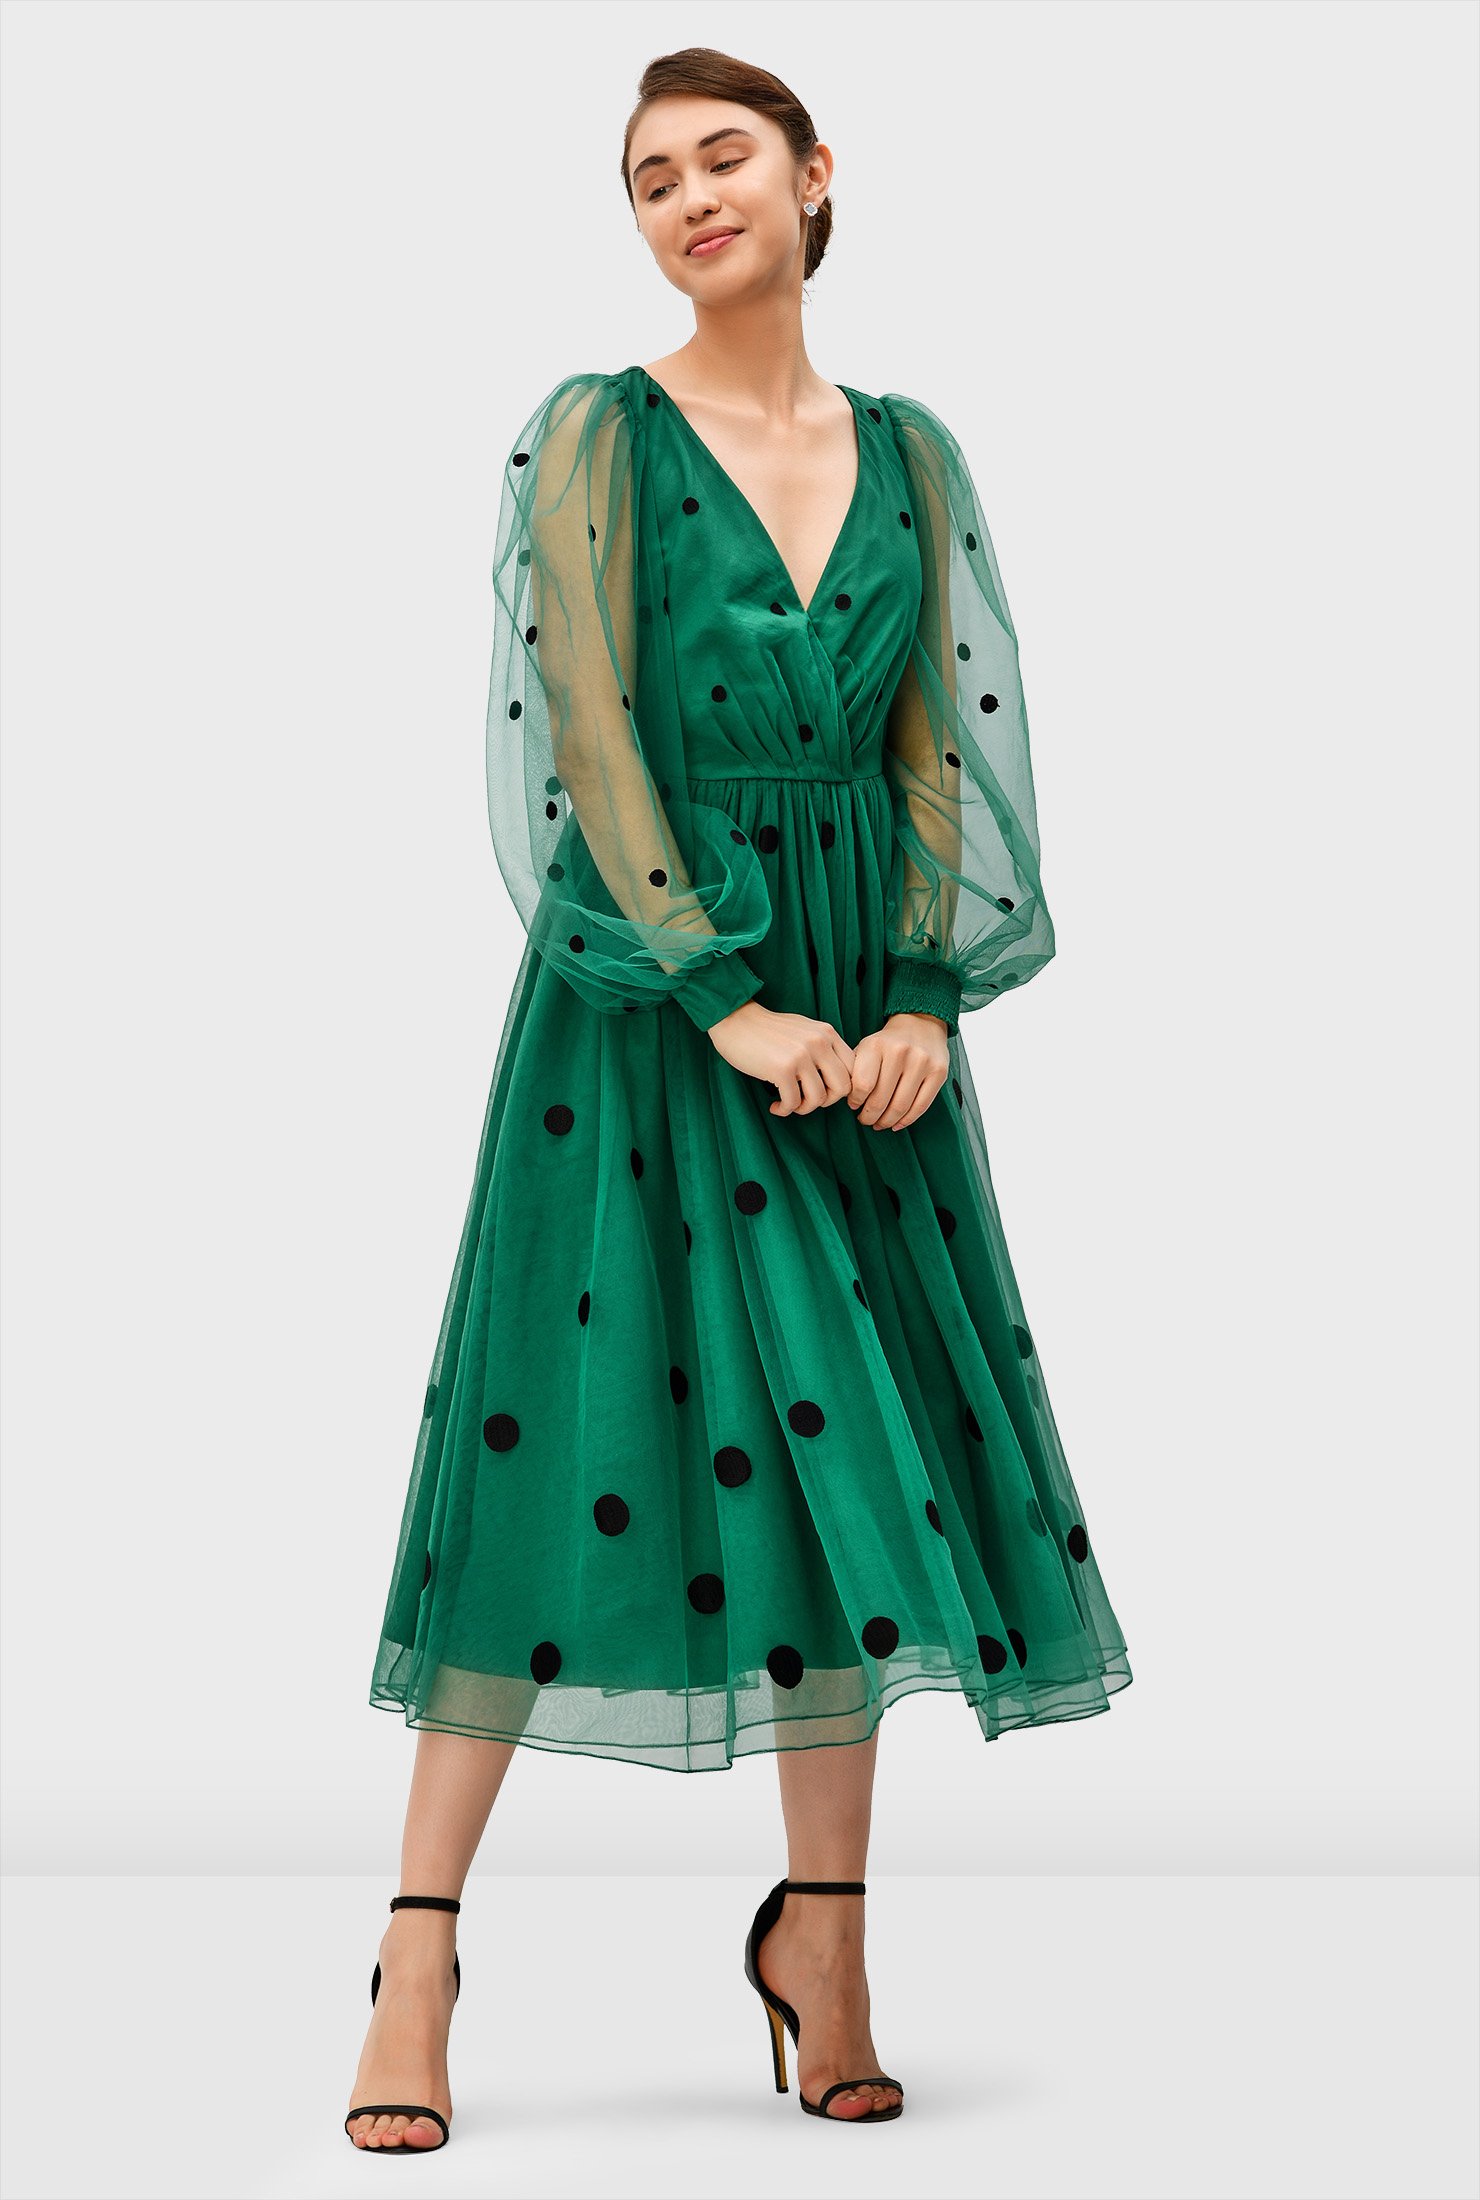 Shop Polka dot embroidery mesh surplice dress | eShakti